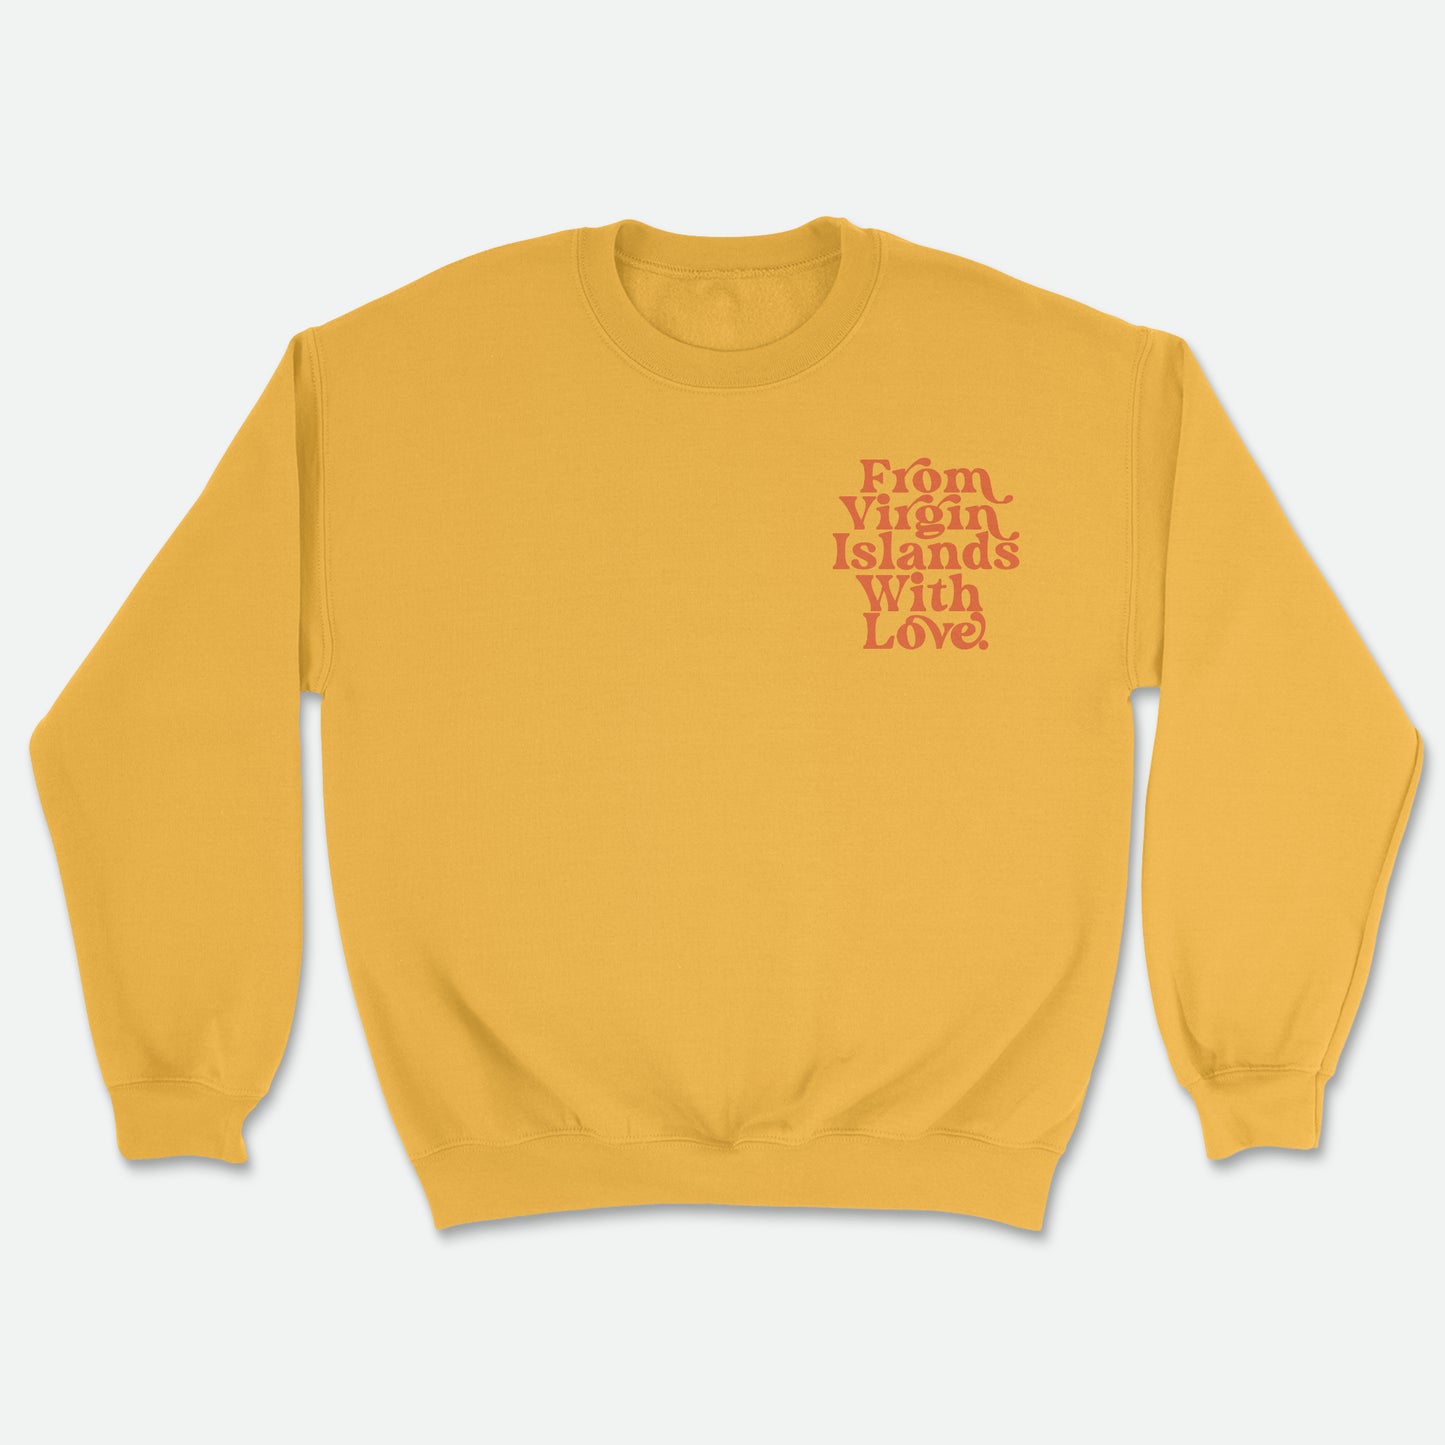 From Virgin Islands With Love Sweatshirt (Orange Print)